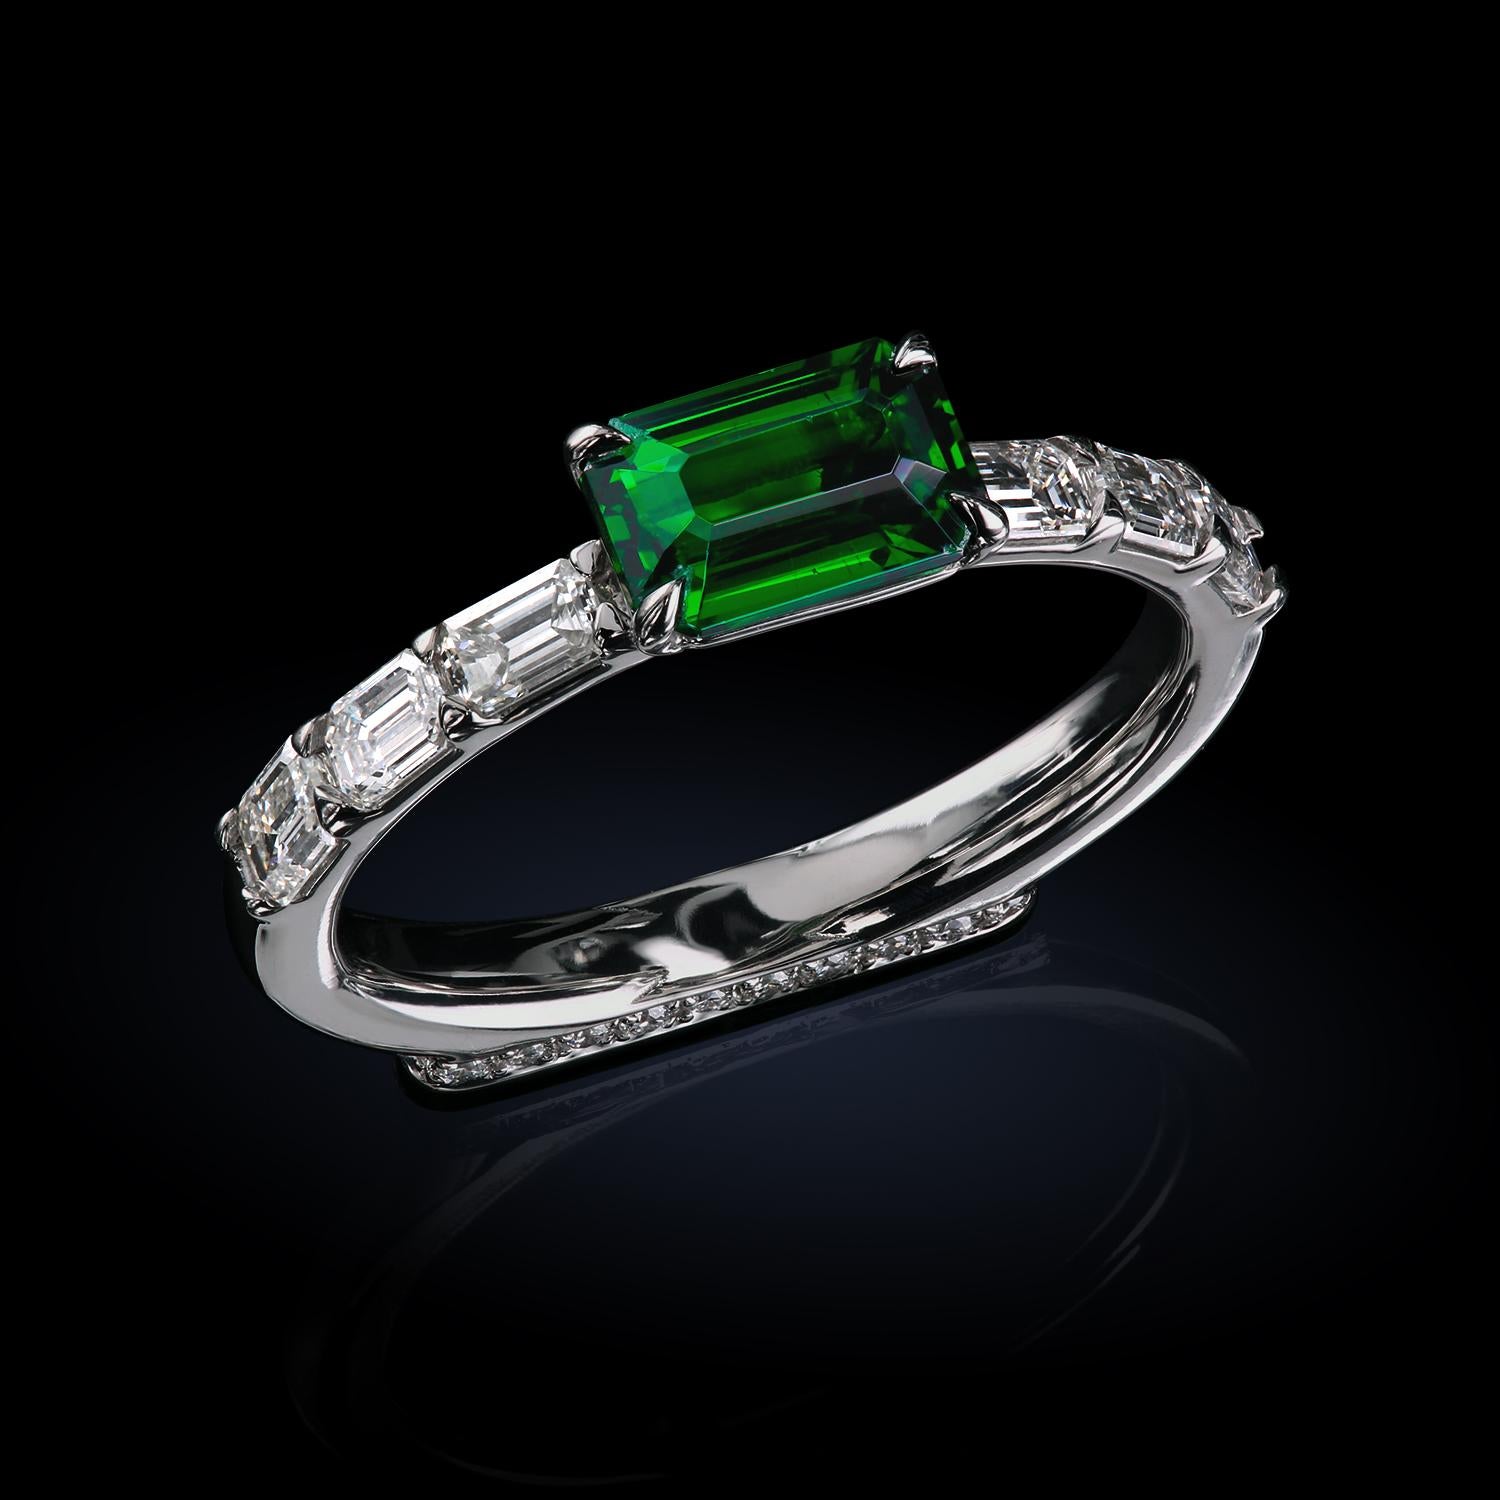 Women's Leon Mege Platinum East-West Ring with 1.00-carat Emerald Cut Tsavorite  For Sale